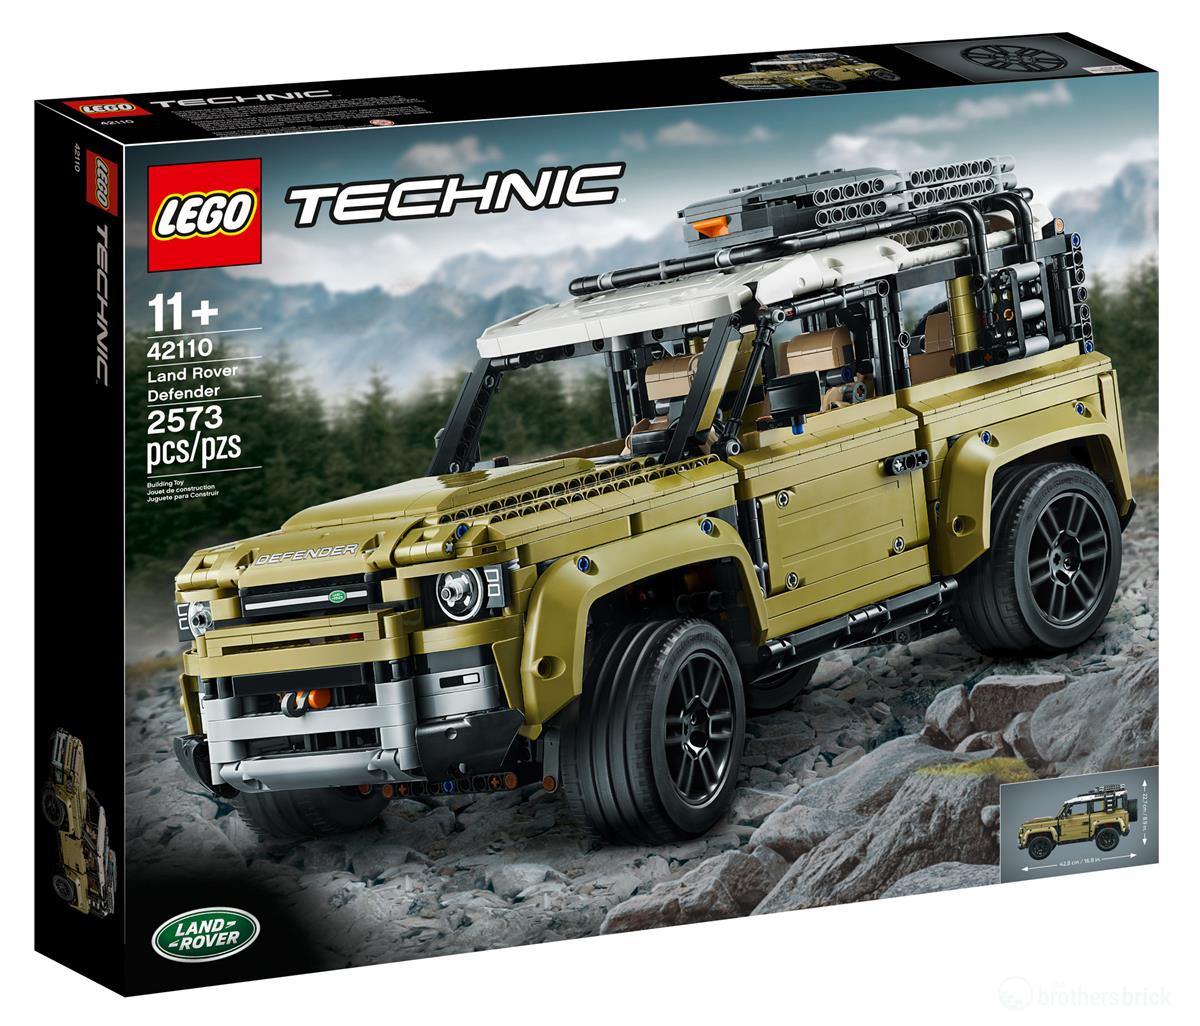 LEGO 42110 LAND ROVER DEFENDER TECHNIC